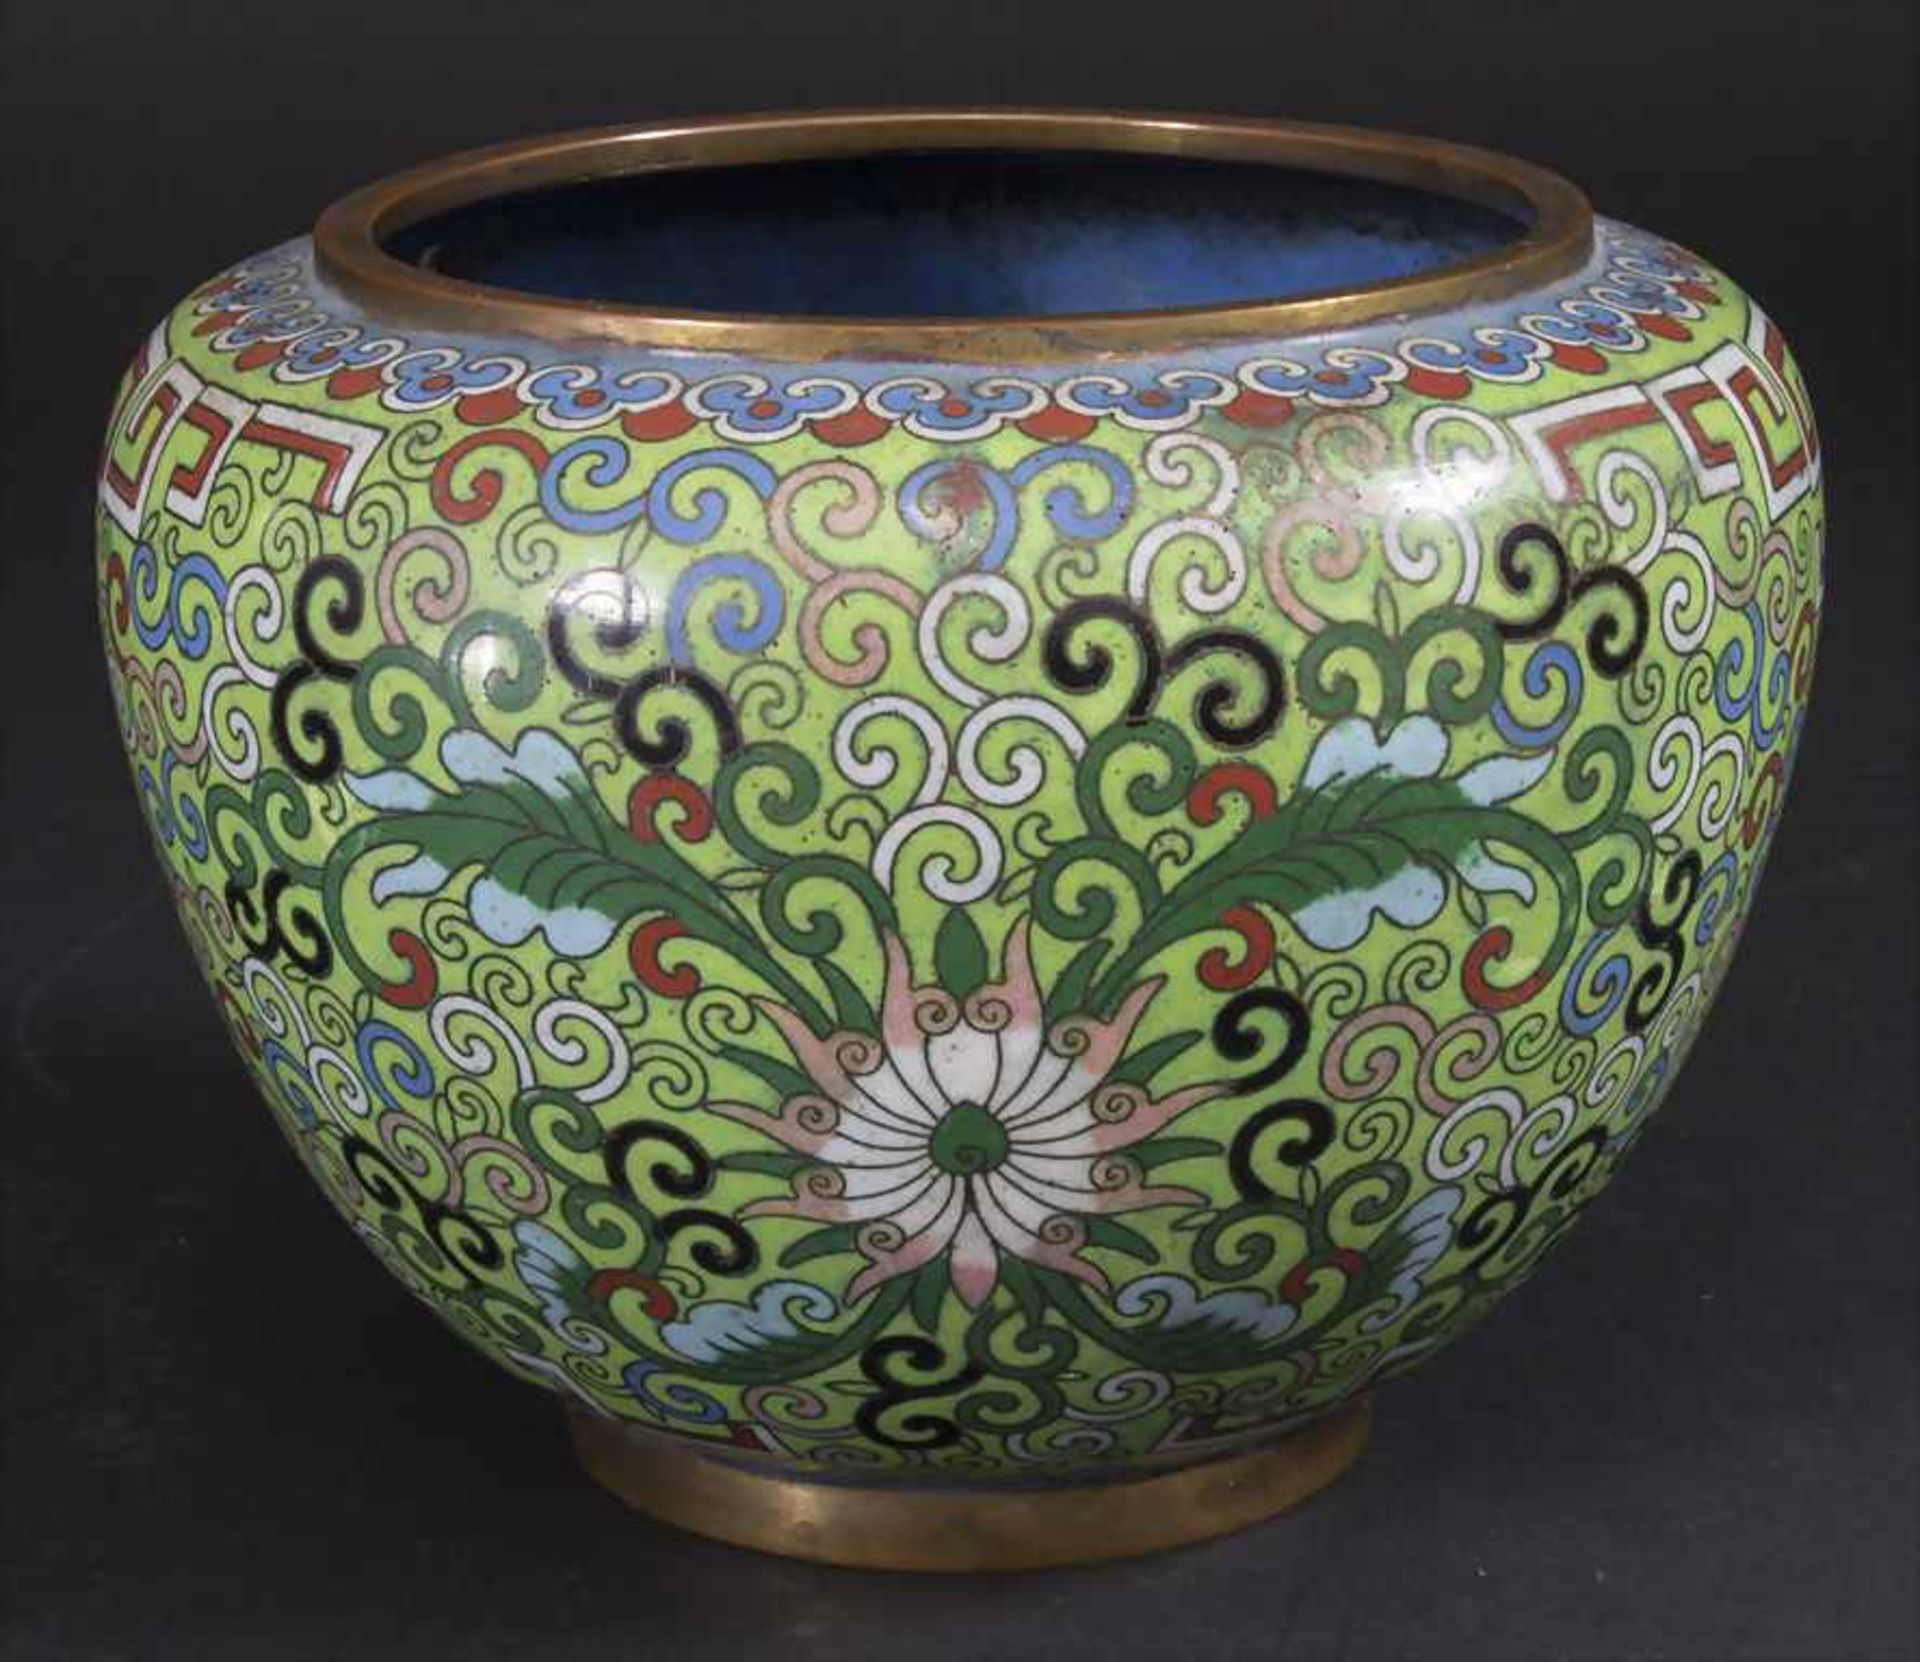 Cloisonné-Ziervase / An enamelled decorative vase, China, Qing-Dynastie (1644-1911), 19. Jh. - Image 3 of 7